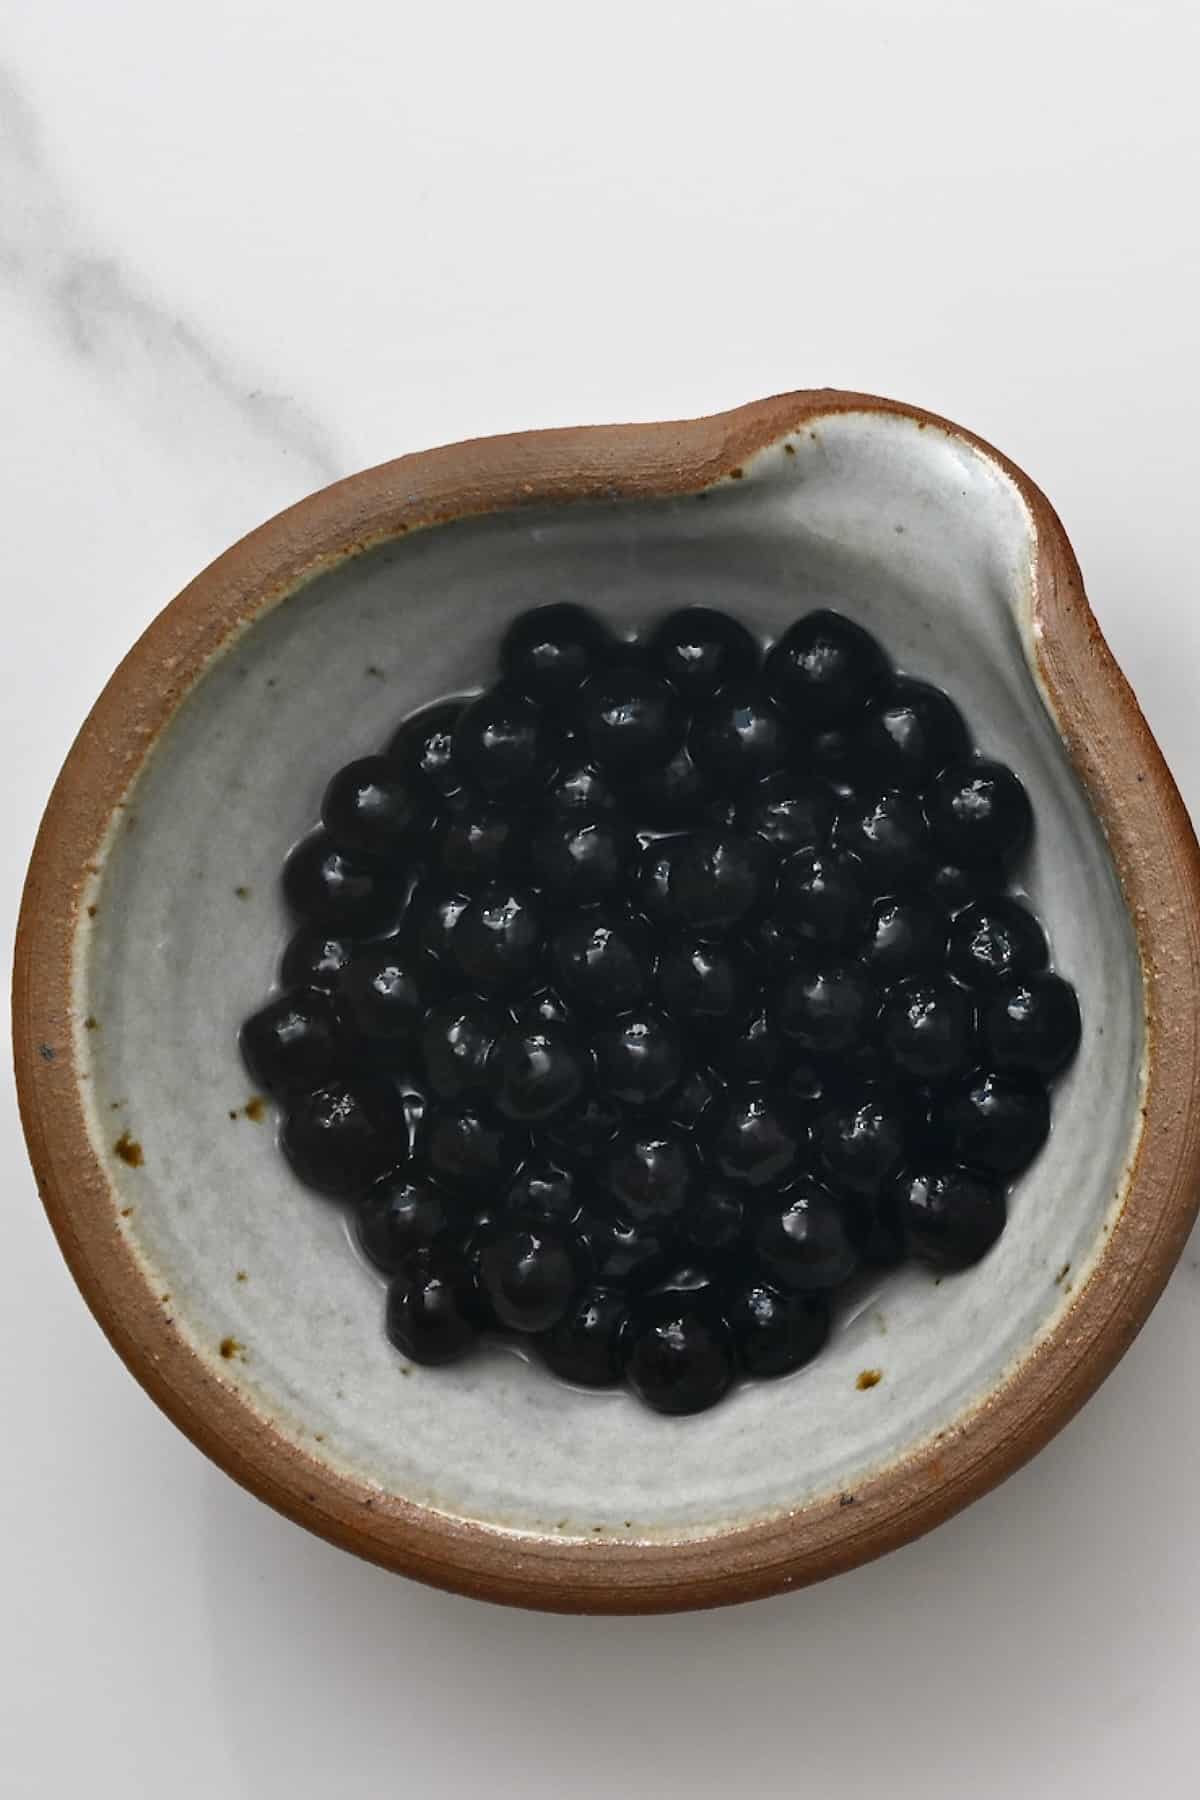 Tapioca pearls in a bowl